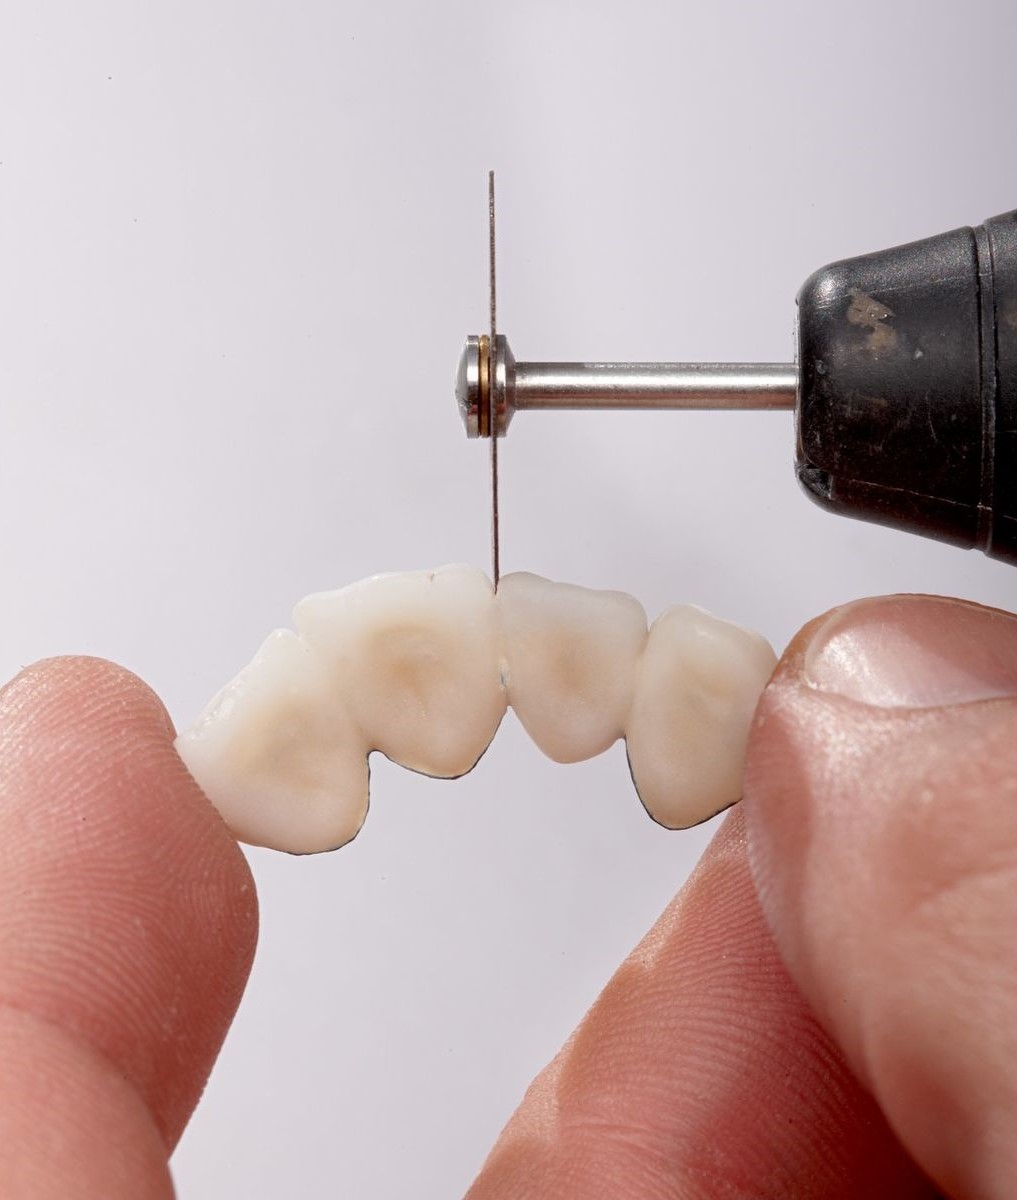 orthodontic saw cutting through mold